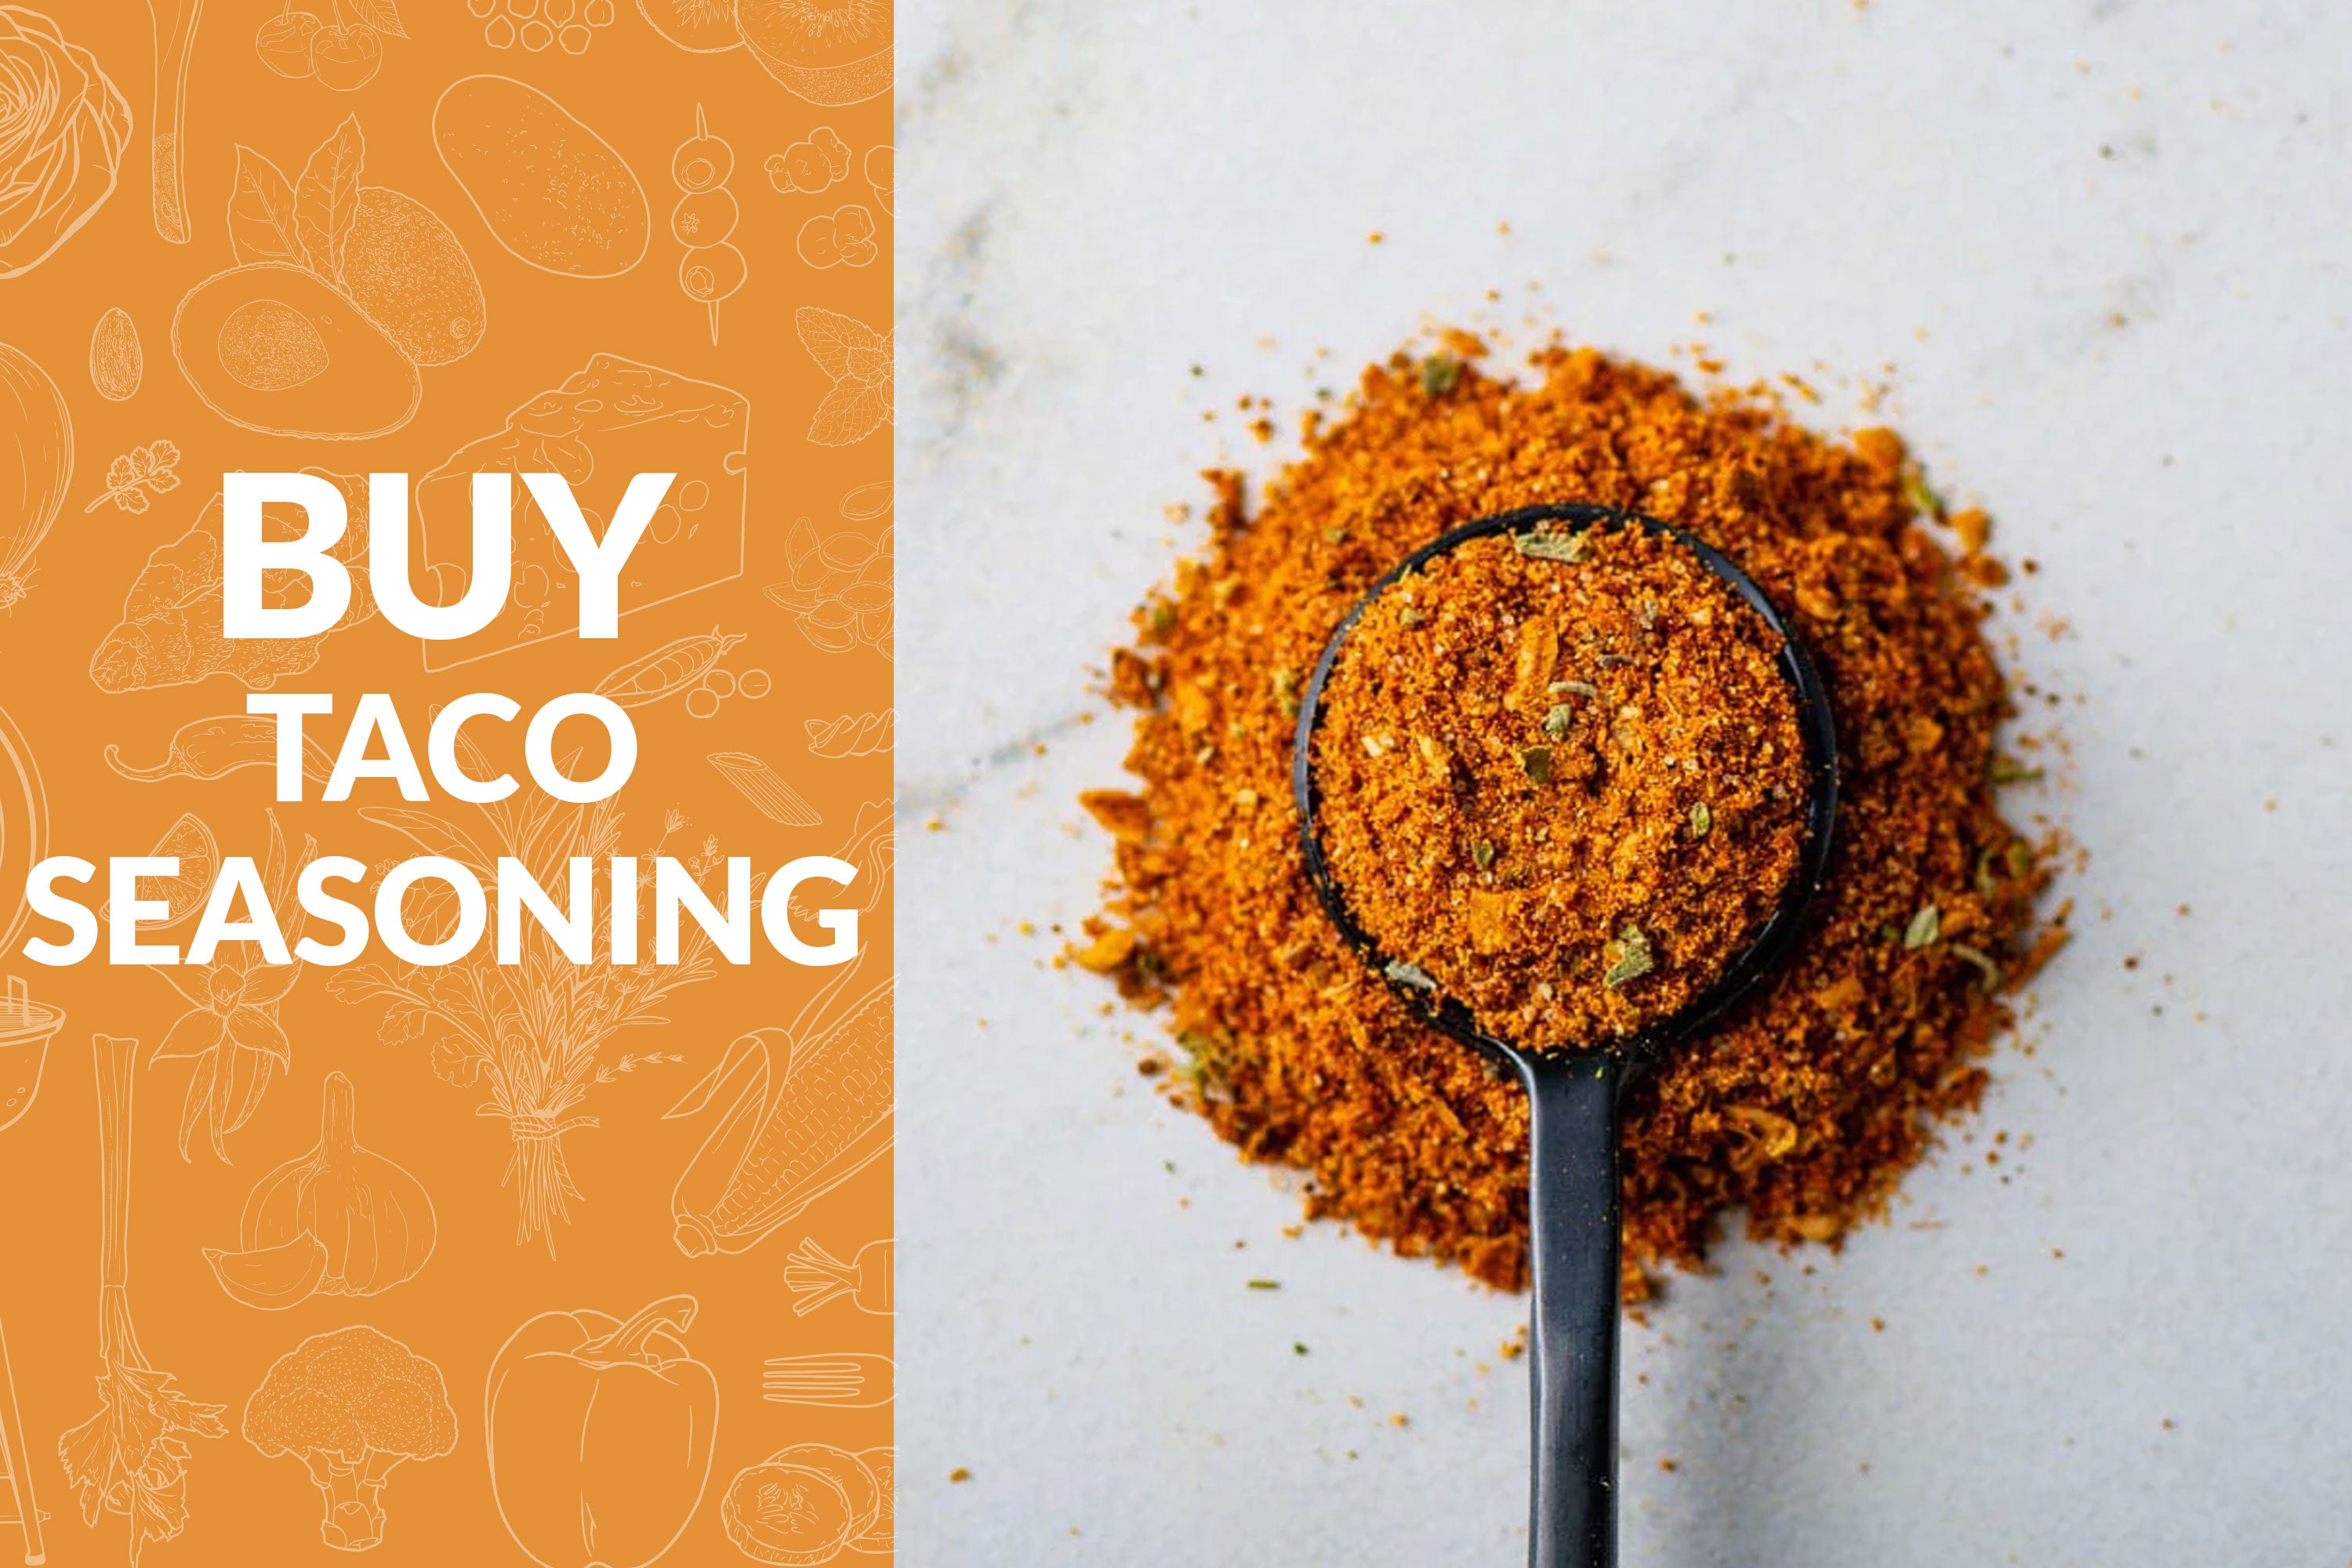 Buy Taco Seasoning with spoon of Taco Seasoning on the right